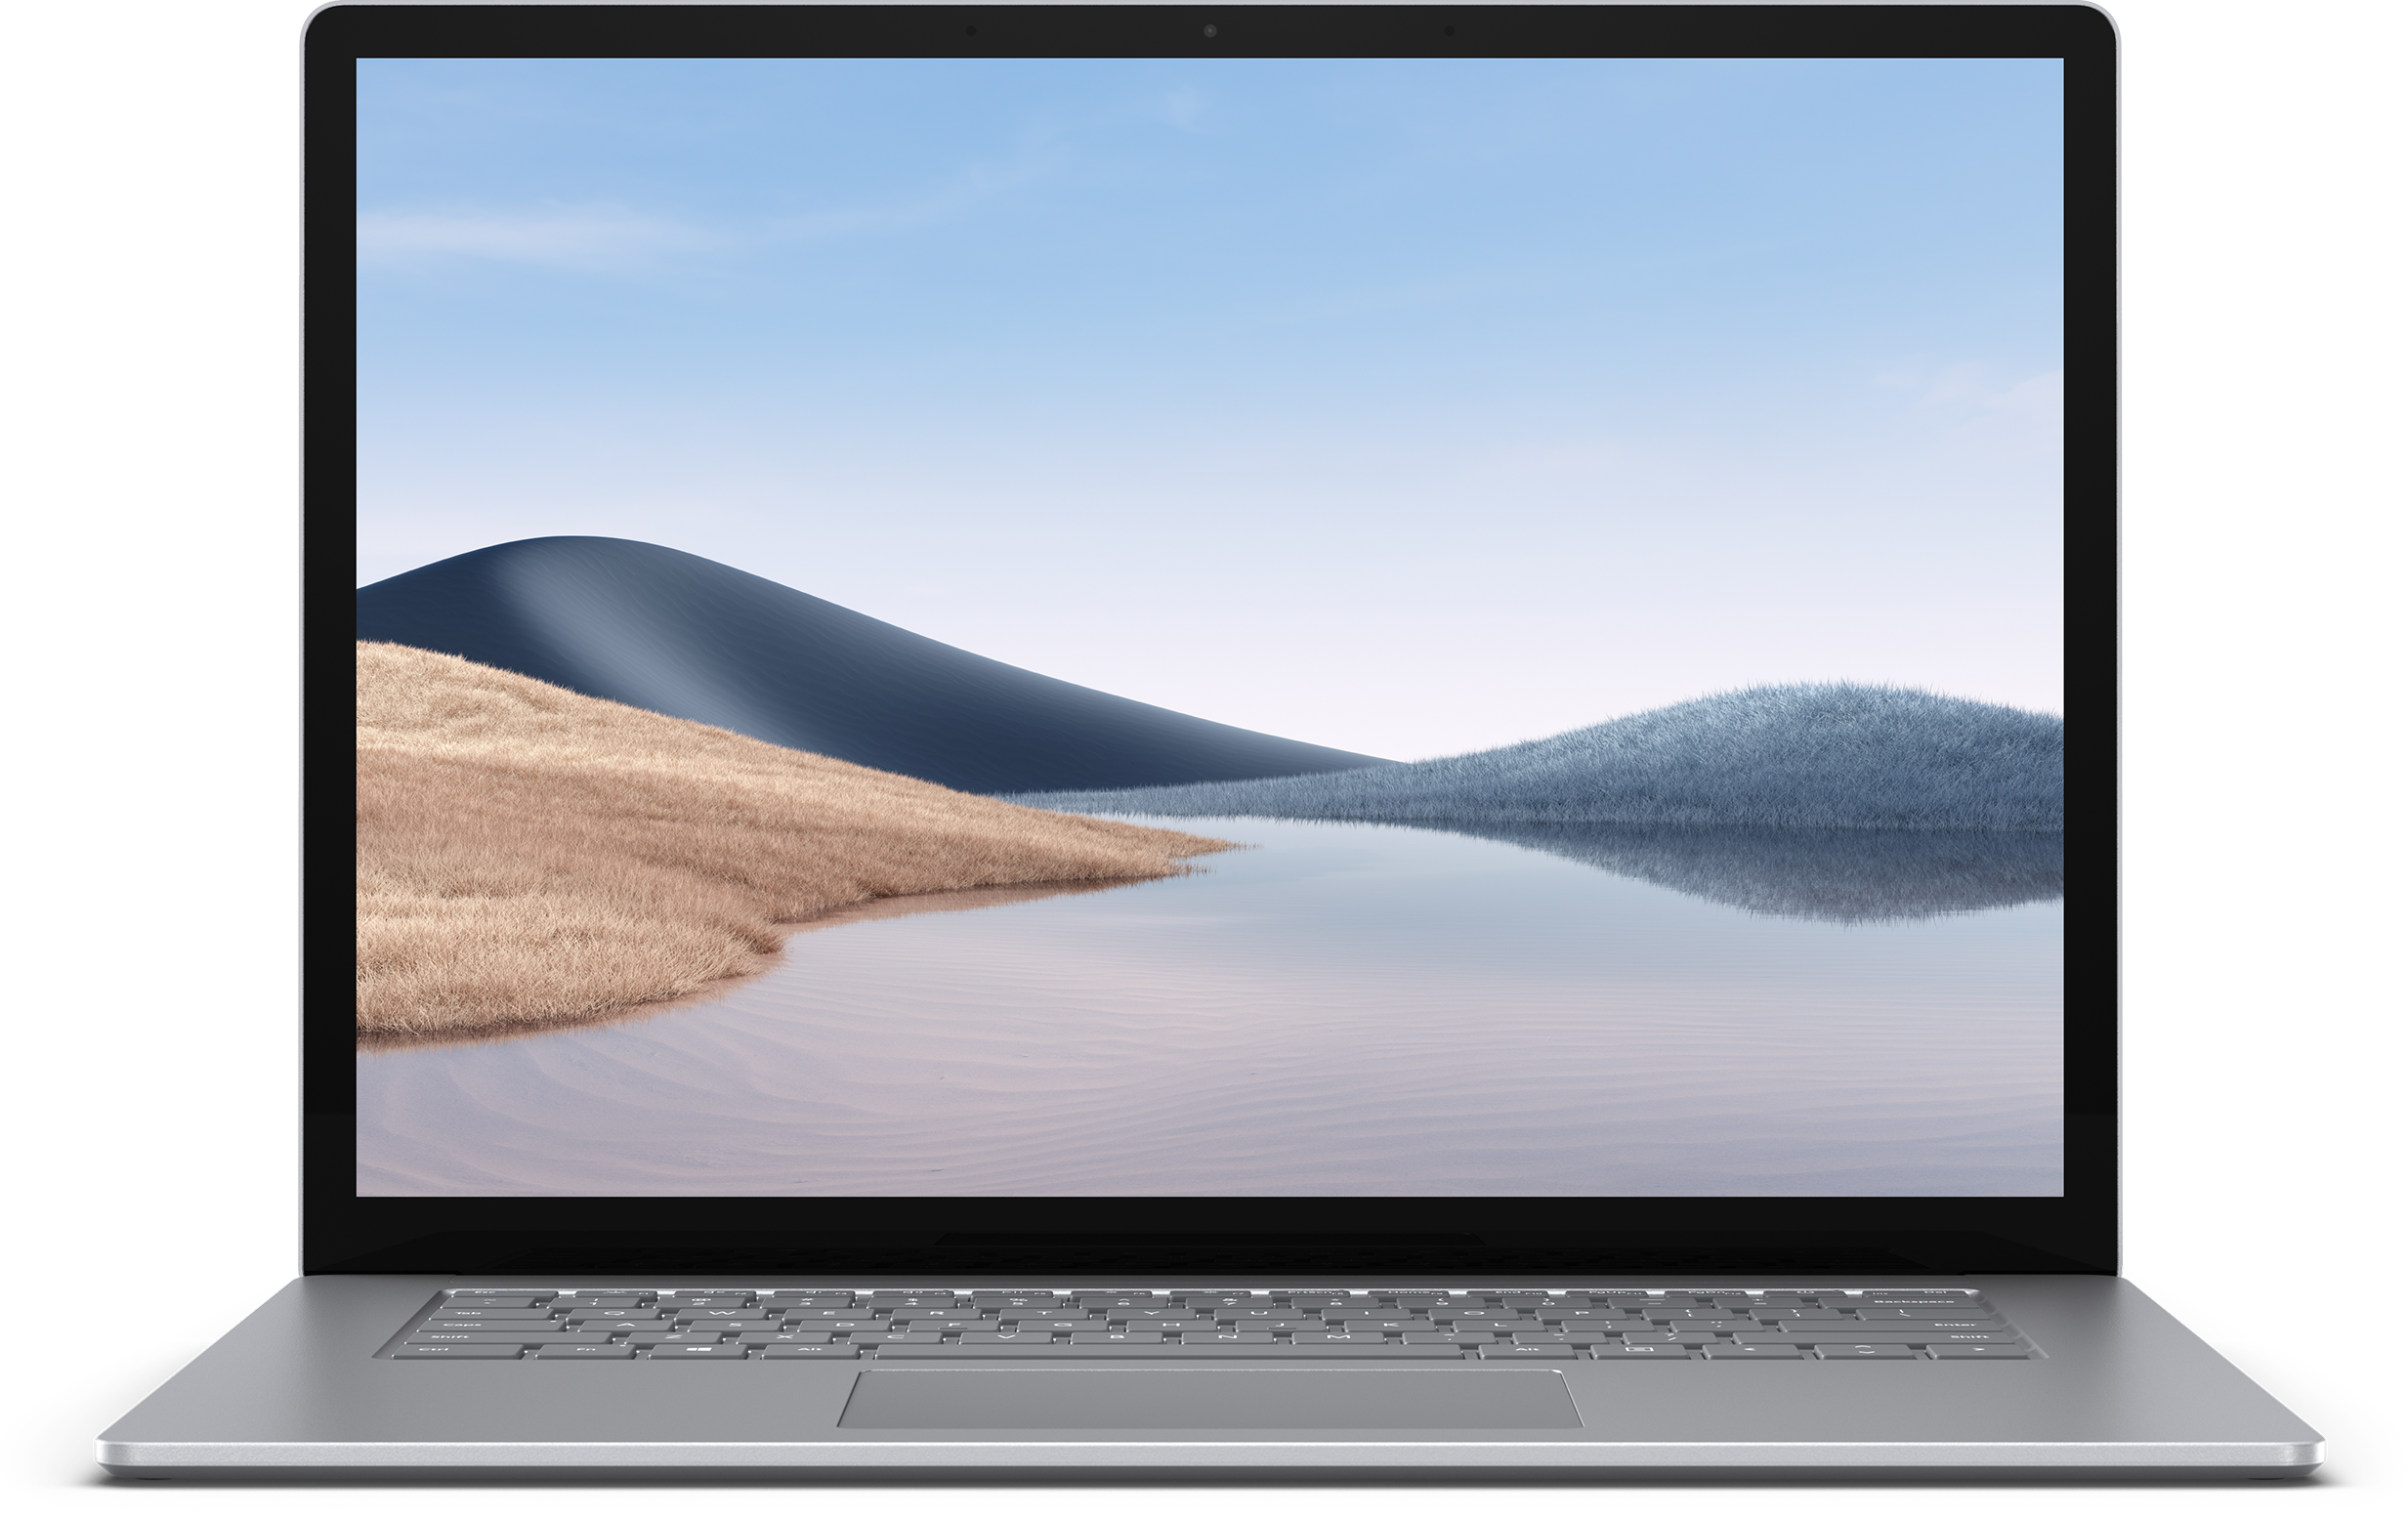 Microsoft Surface Laptop 4 - Intel Core i5 1145G7 - Win 10 Pro - Iris Xe Graphics - 16 GB RAM - 512 GB SSD - 13.5" pantalla táctil 2256 x 1504 - Wi-Fi 6 - platino - demostración, comercial - MICROSOFT